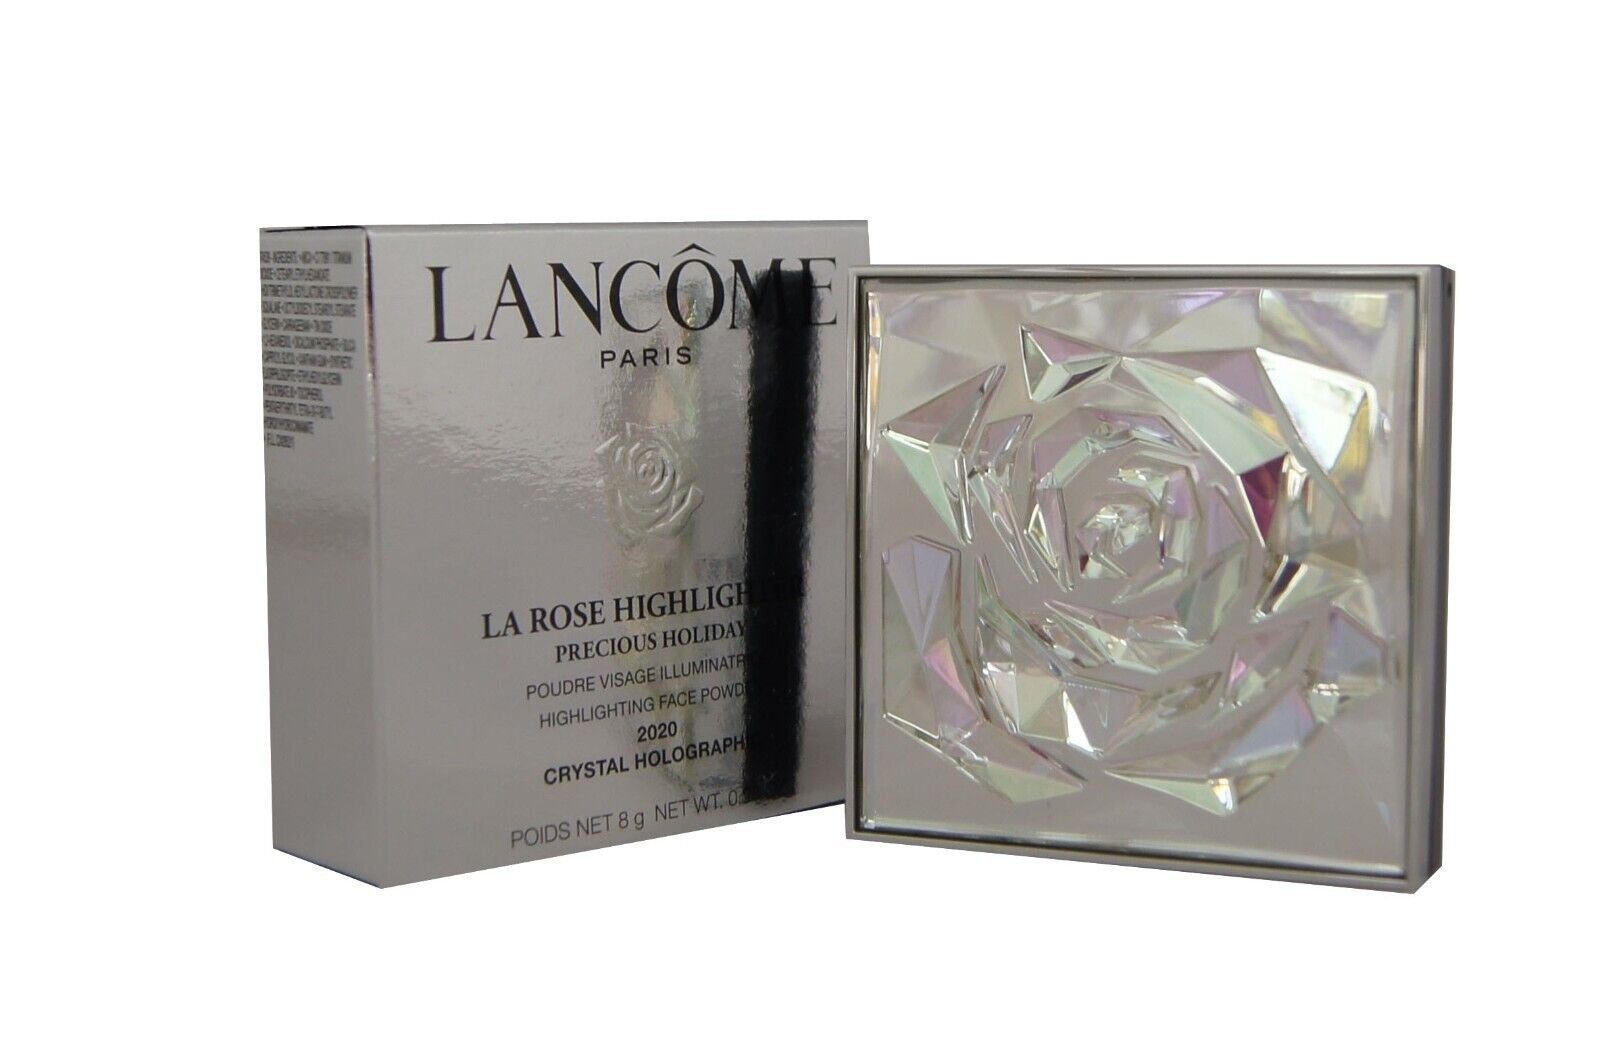 LANCOME Make-up Lancome La Rose 8g Highlighter Precious Holiday